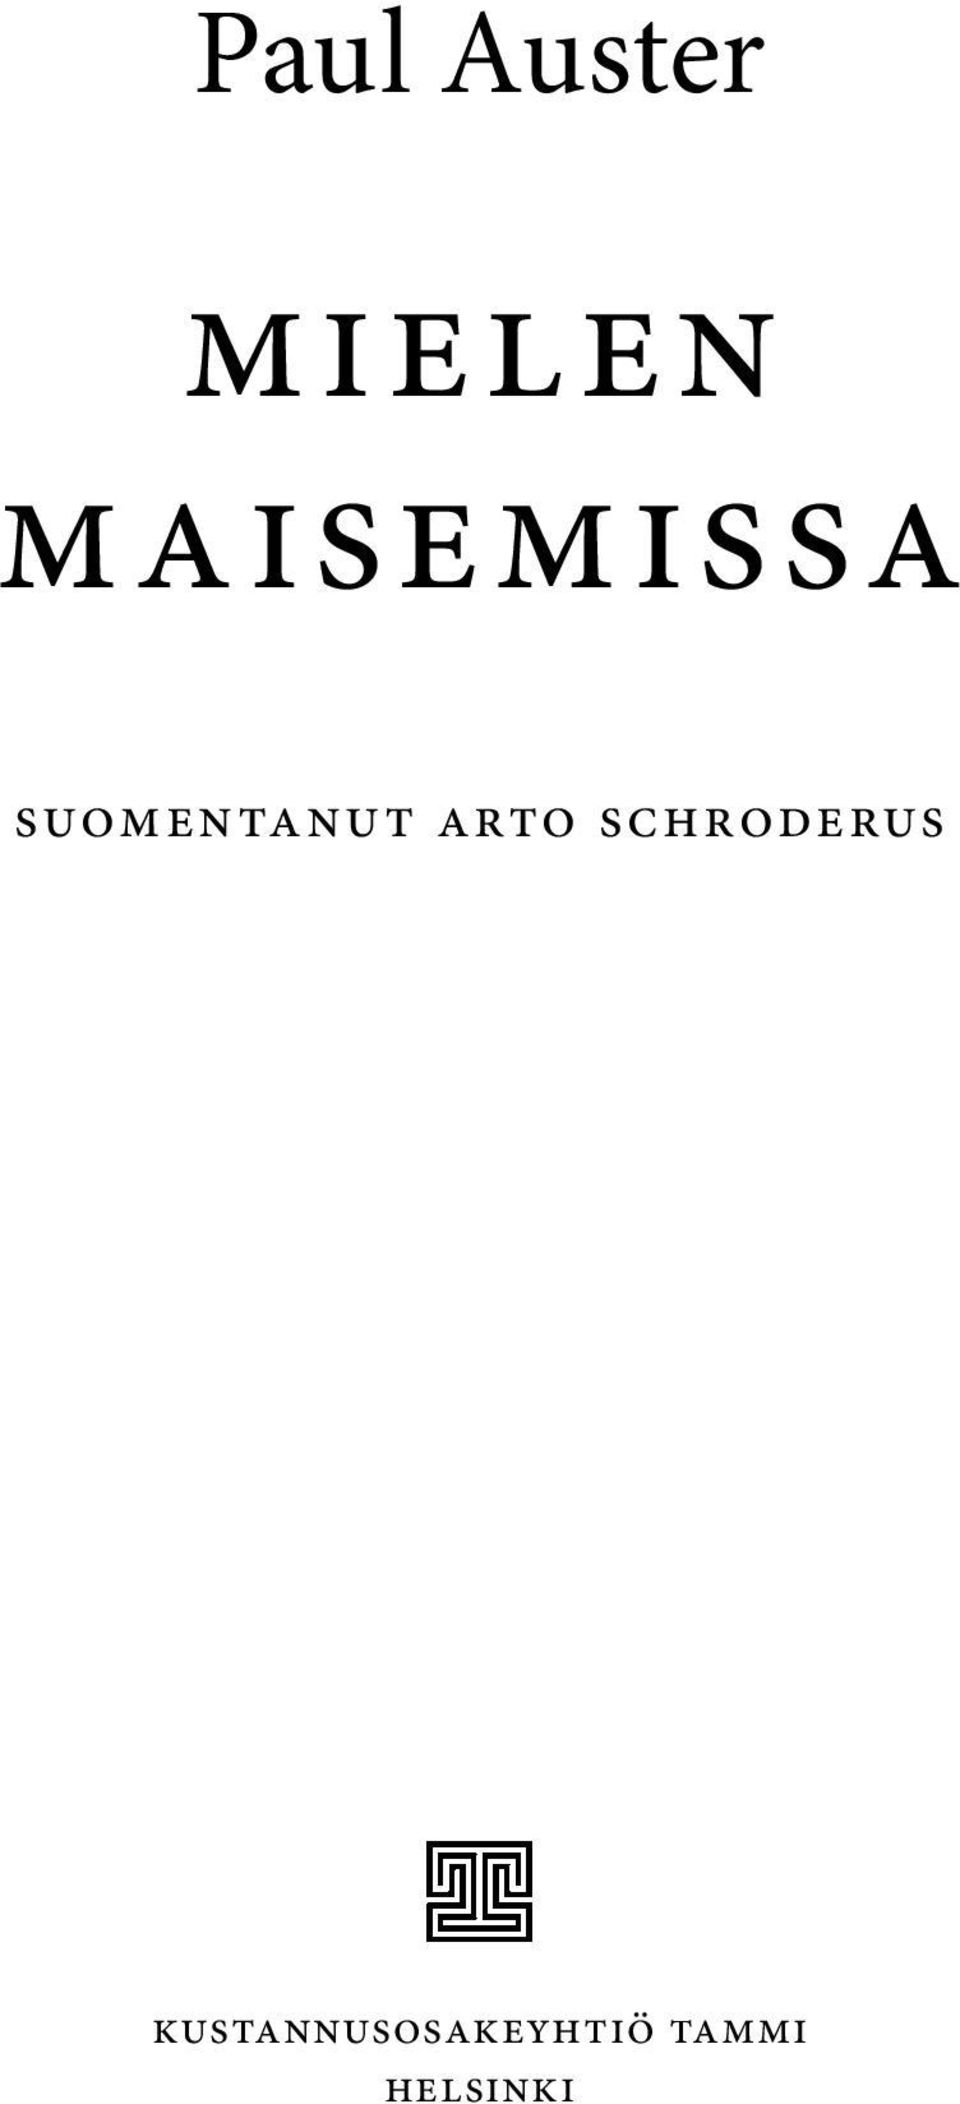 Arto Schroderus